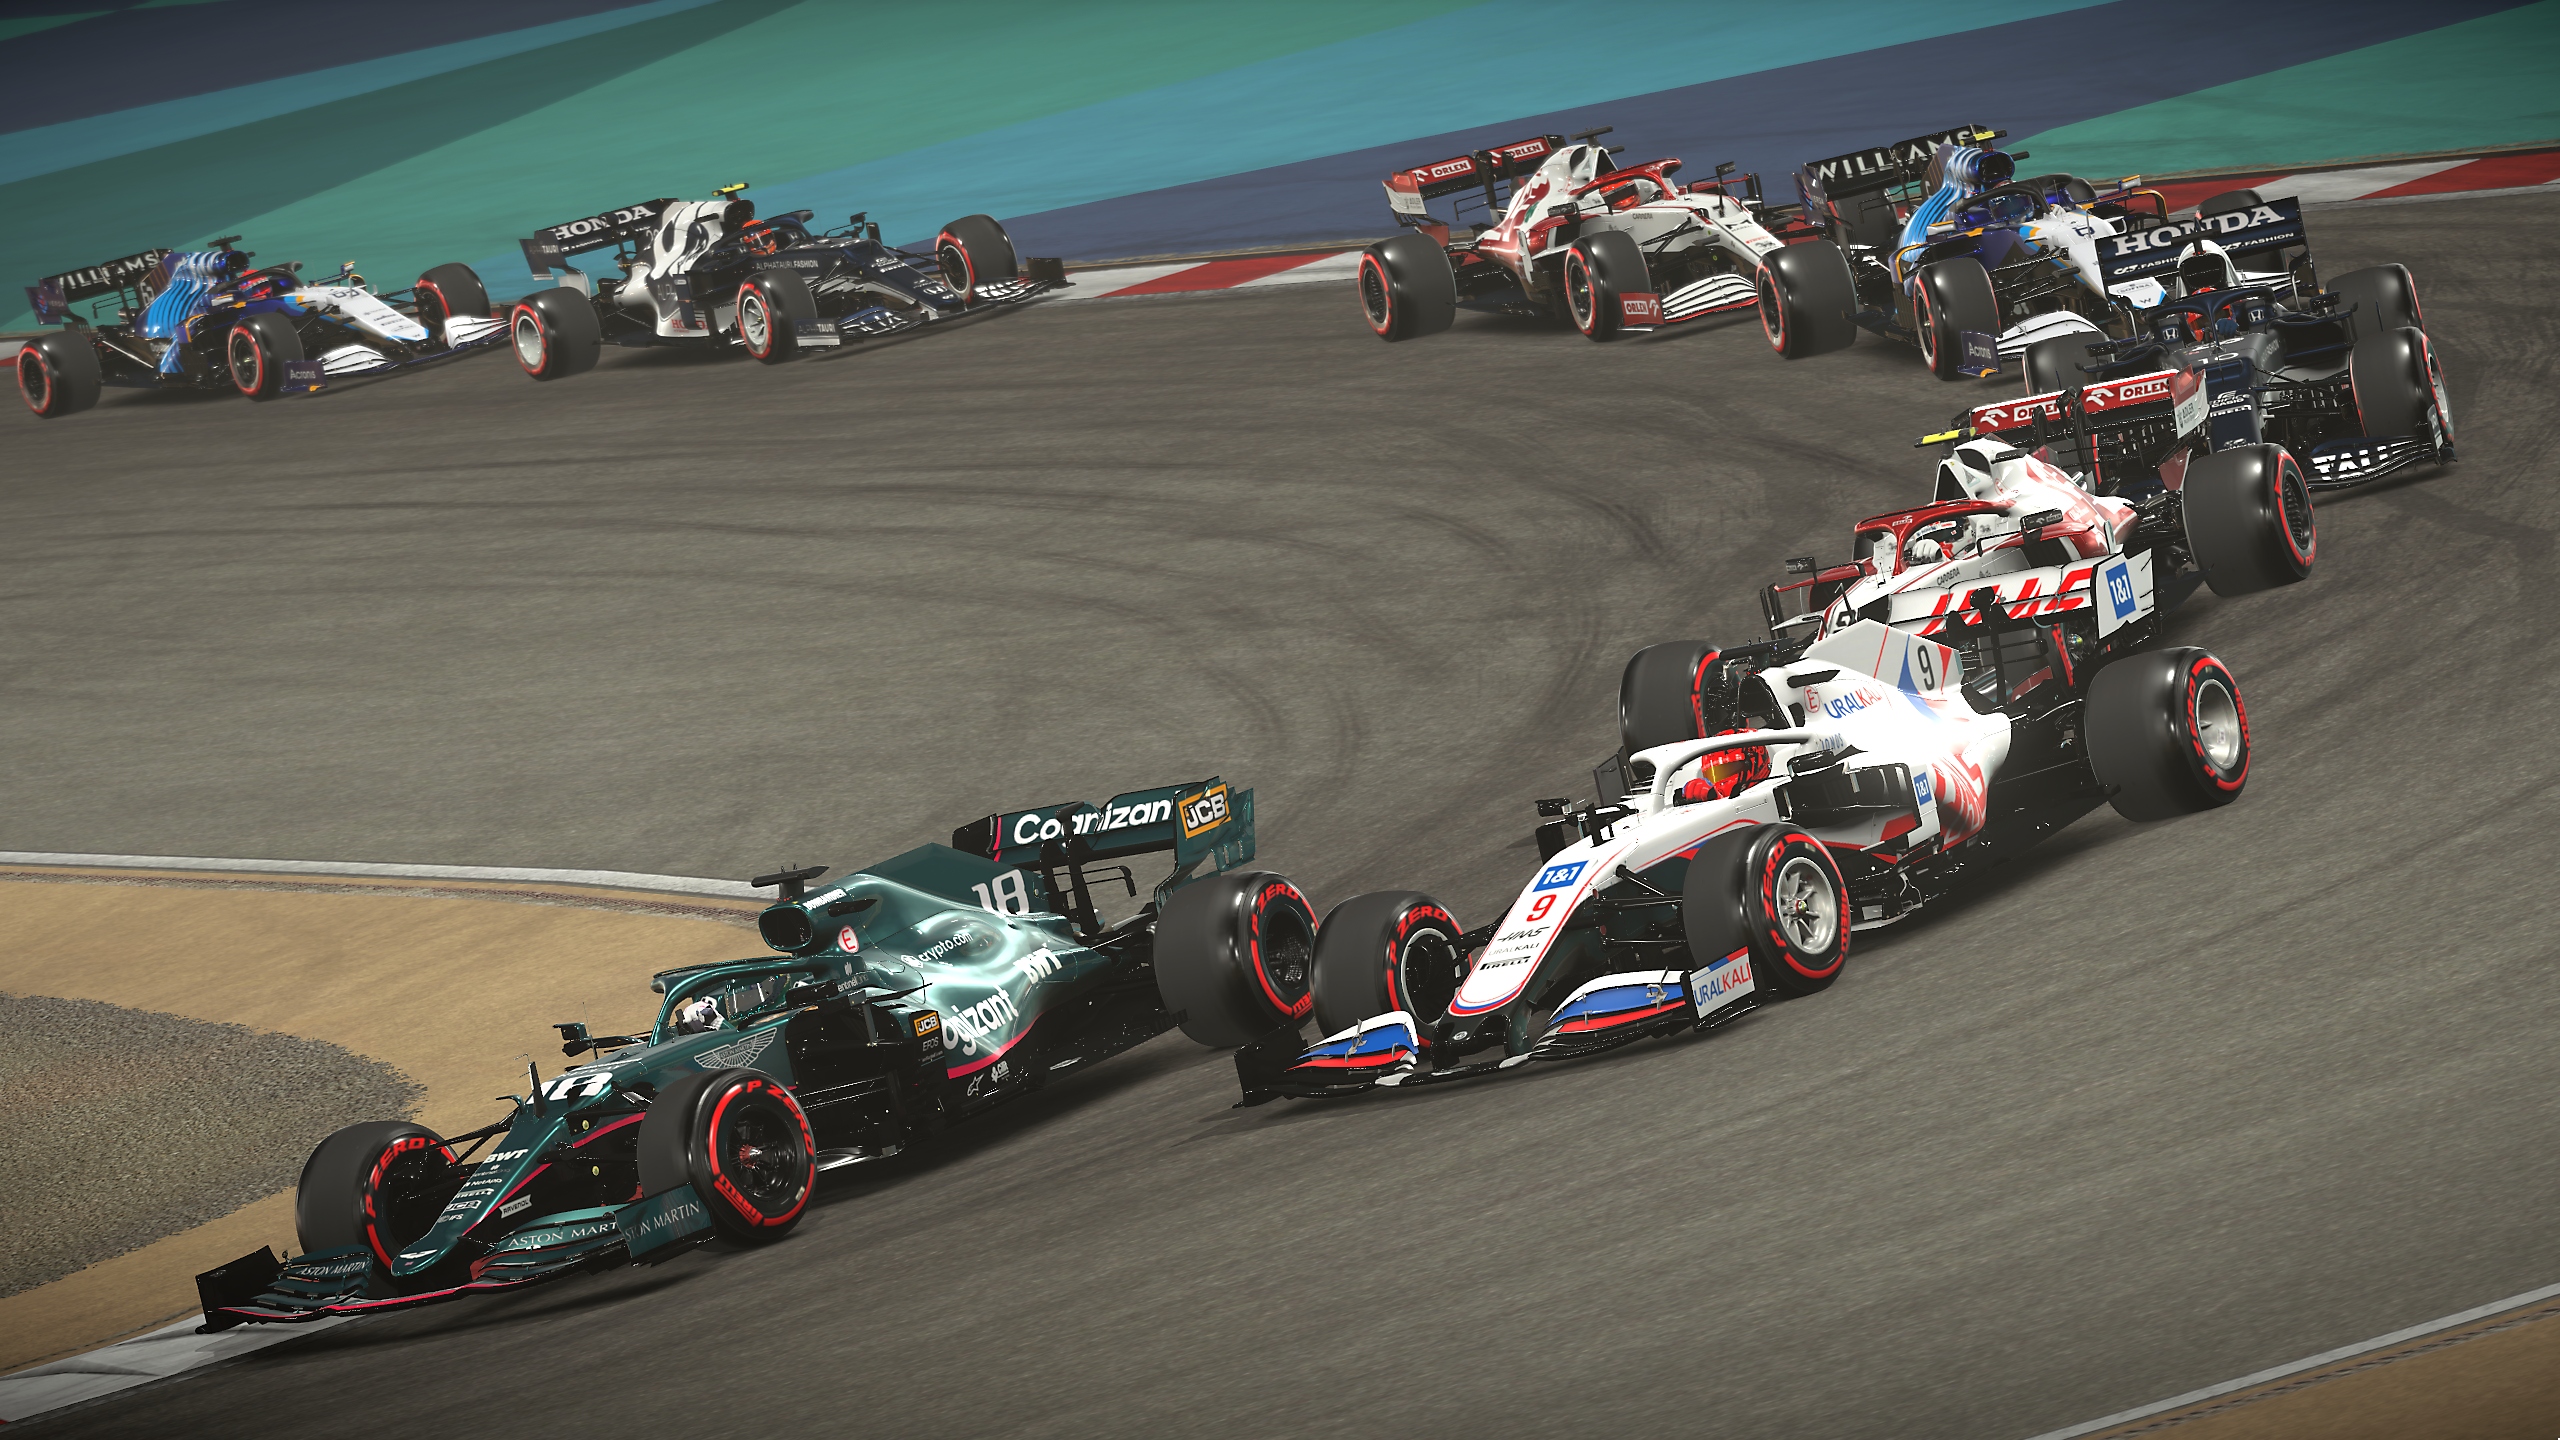 F1 2021 game screenshot